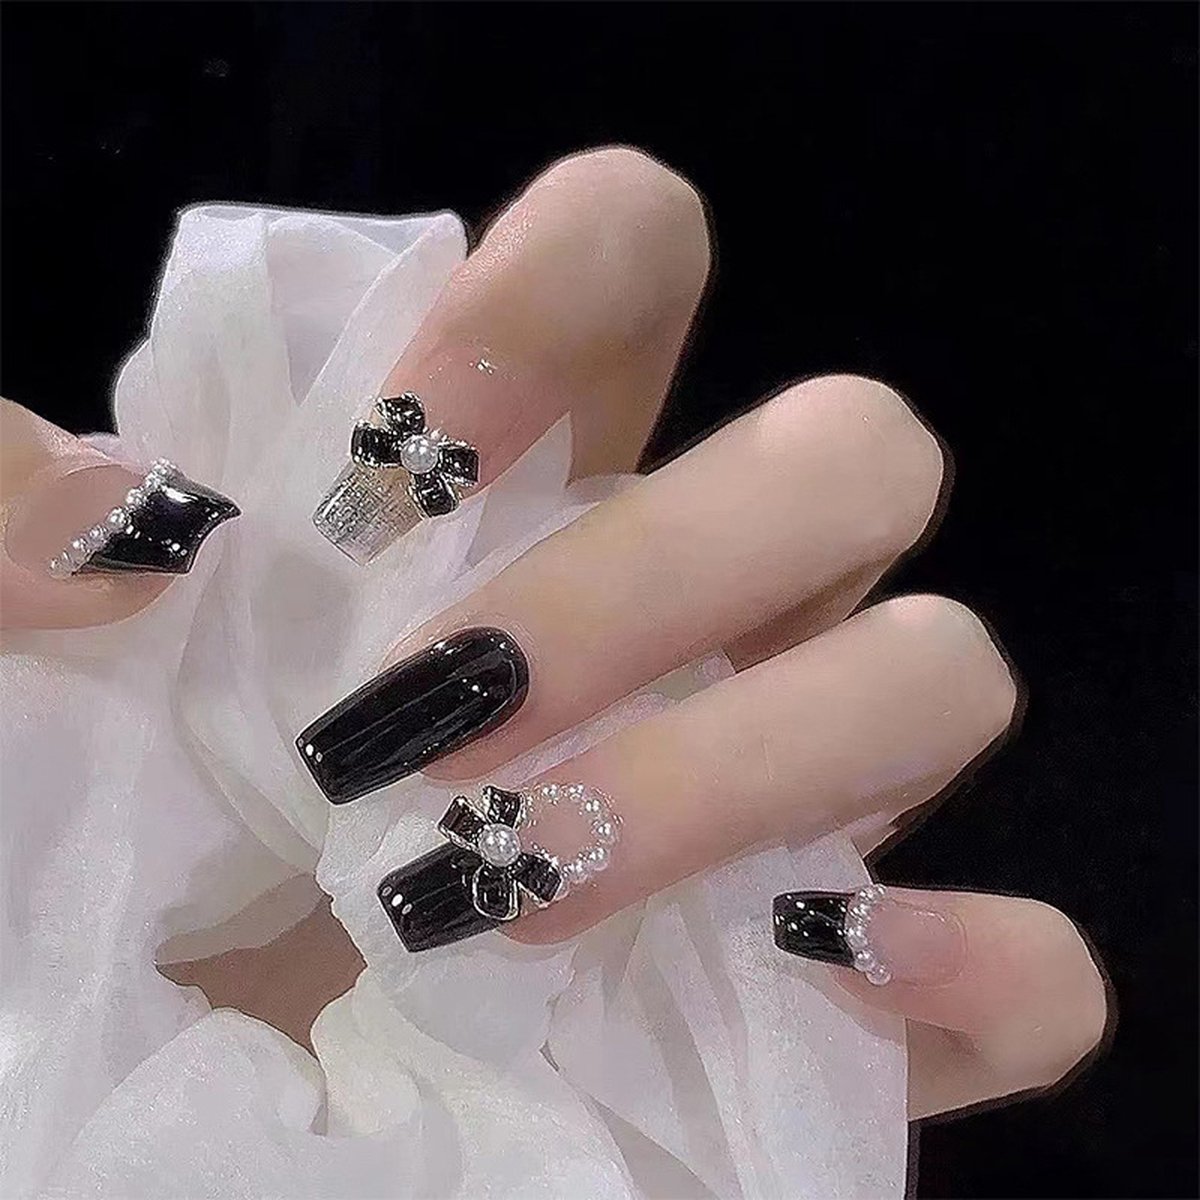 Zhenyue-Nail Art -Plaknagels-Nail Art Set Tools - Nagelstickers Meisjes-Nagelstickers Nail Art-Gel Nail Wraps - Nagels Wraps-24 Stickers